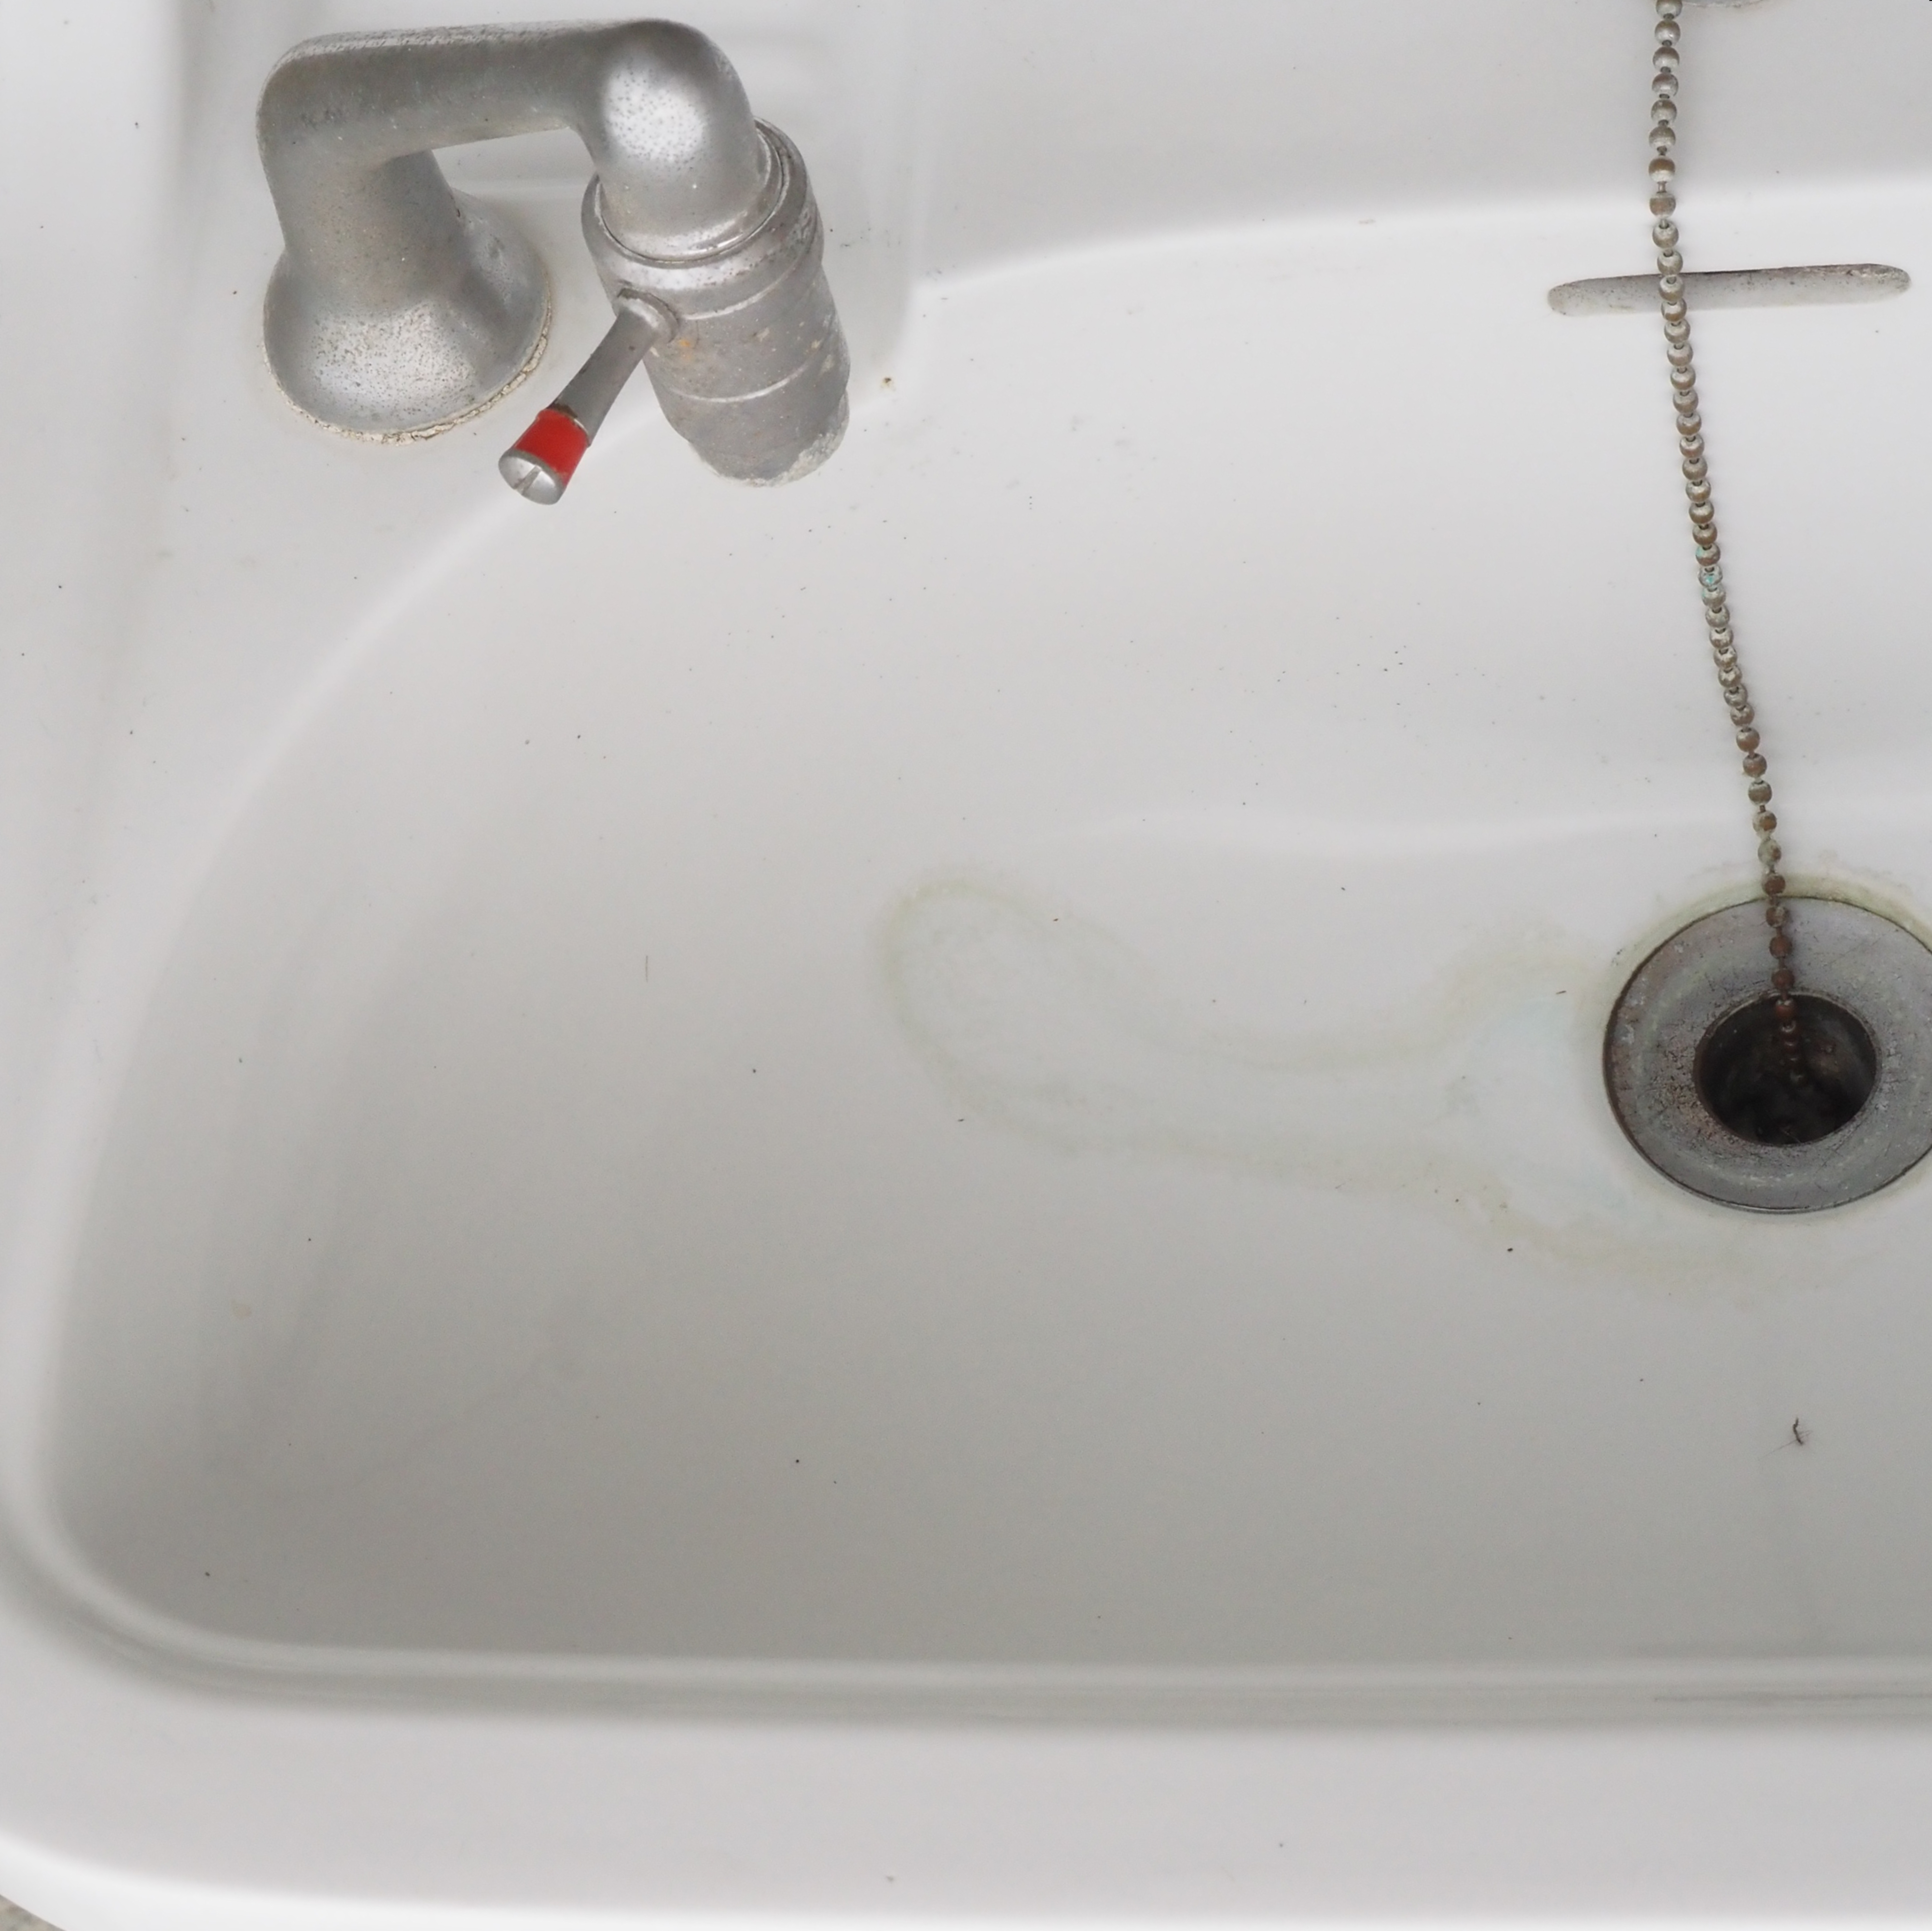 Wall bathroom sink in vitreous china porcelain